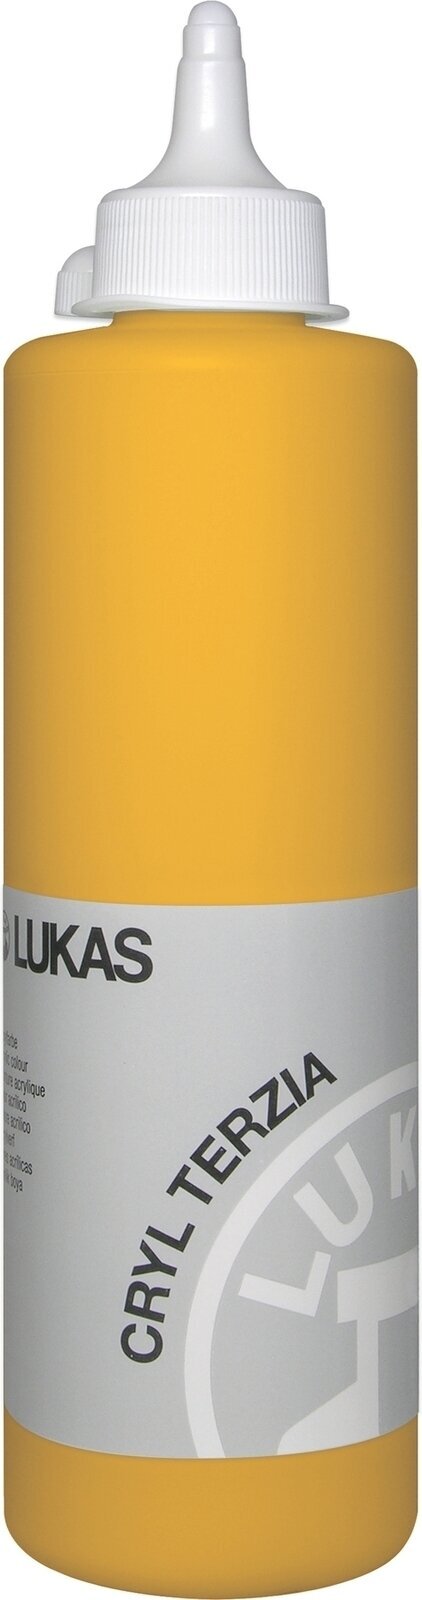 Akrilna barva Lukas Cryl Terzia Acrylic Paint Plastic Bottle Akrilna barva Indian Yellow 500 ml 1 kos